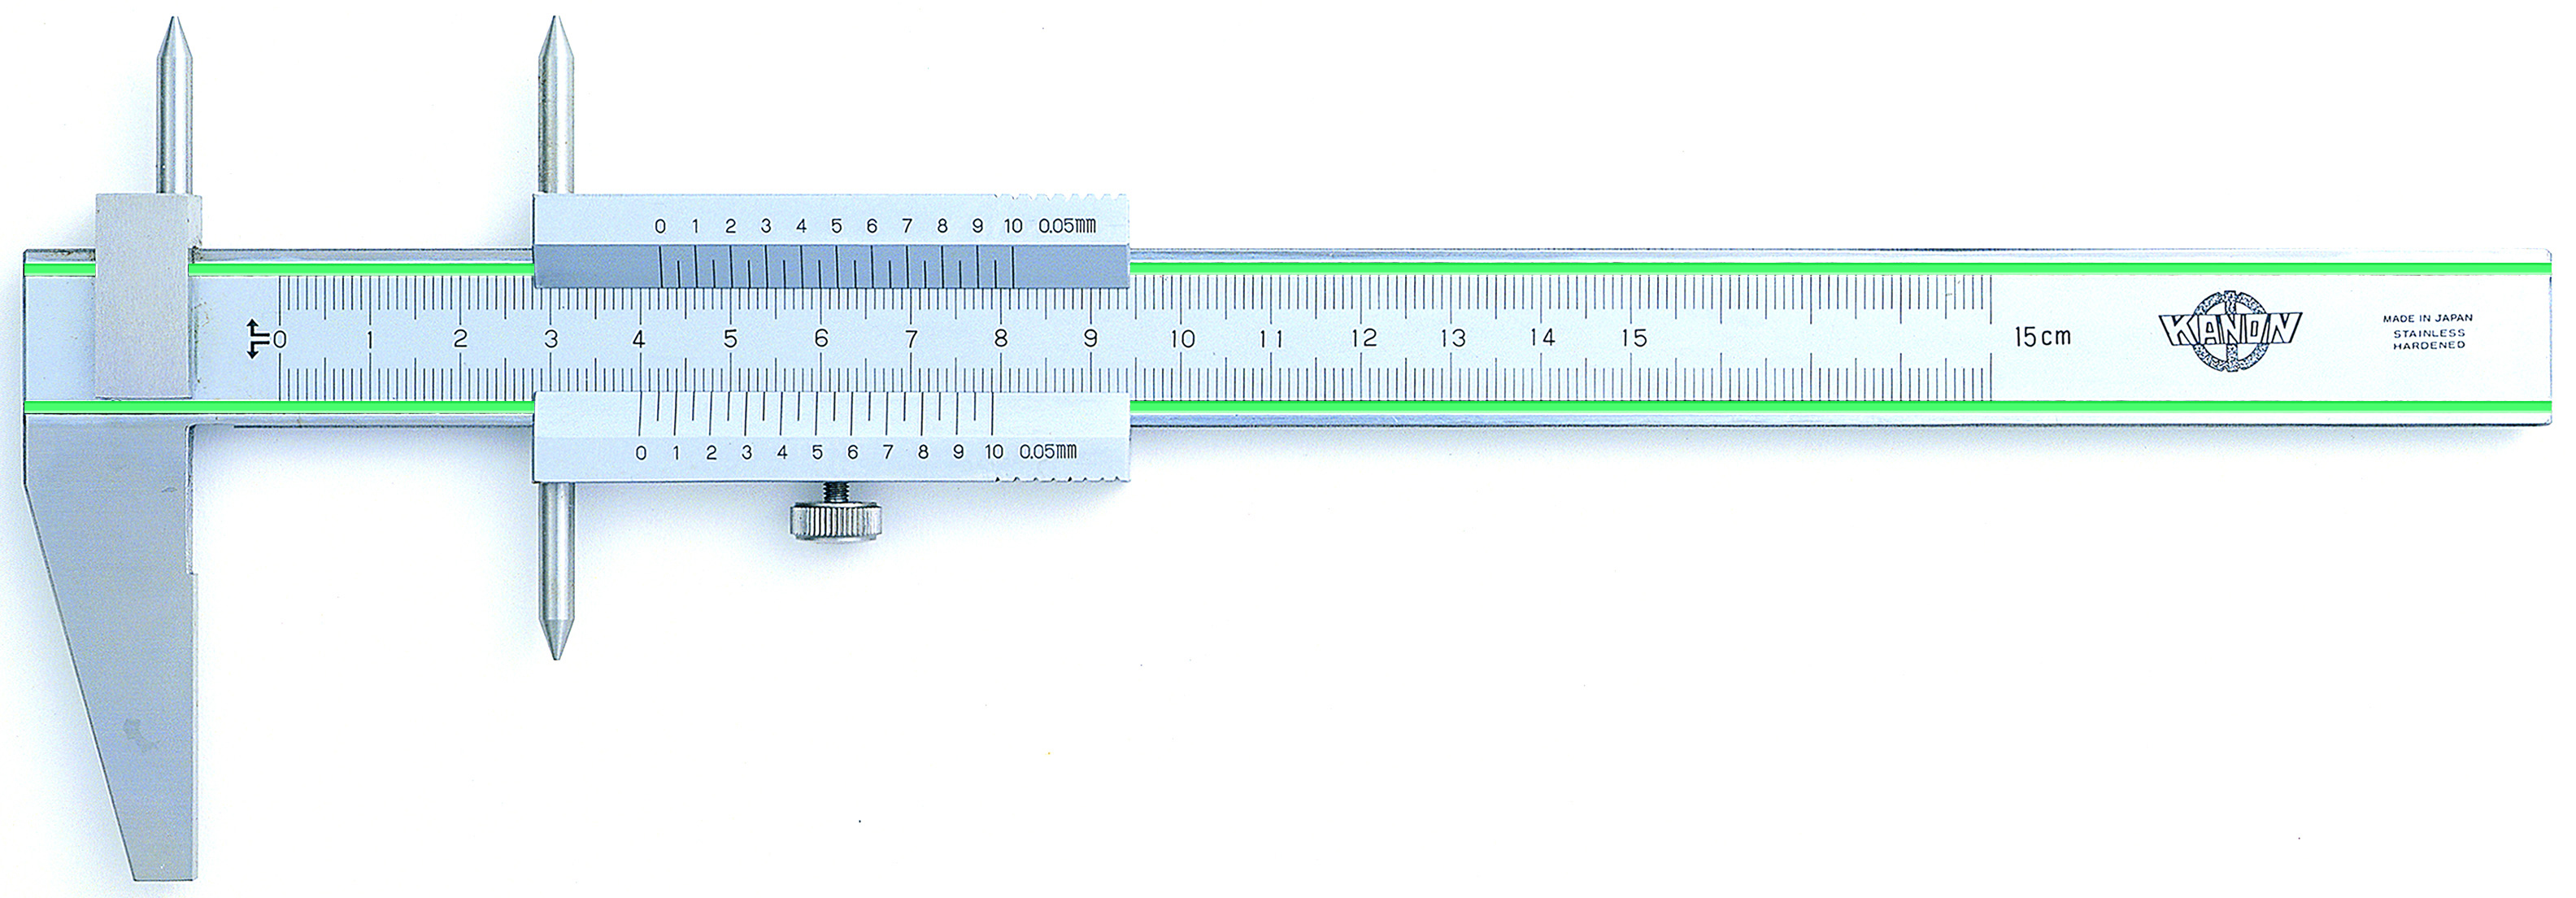 Centerline Caliper - Vernier, Small Diameter Type, RM-S